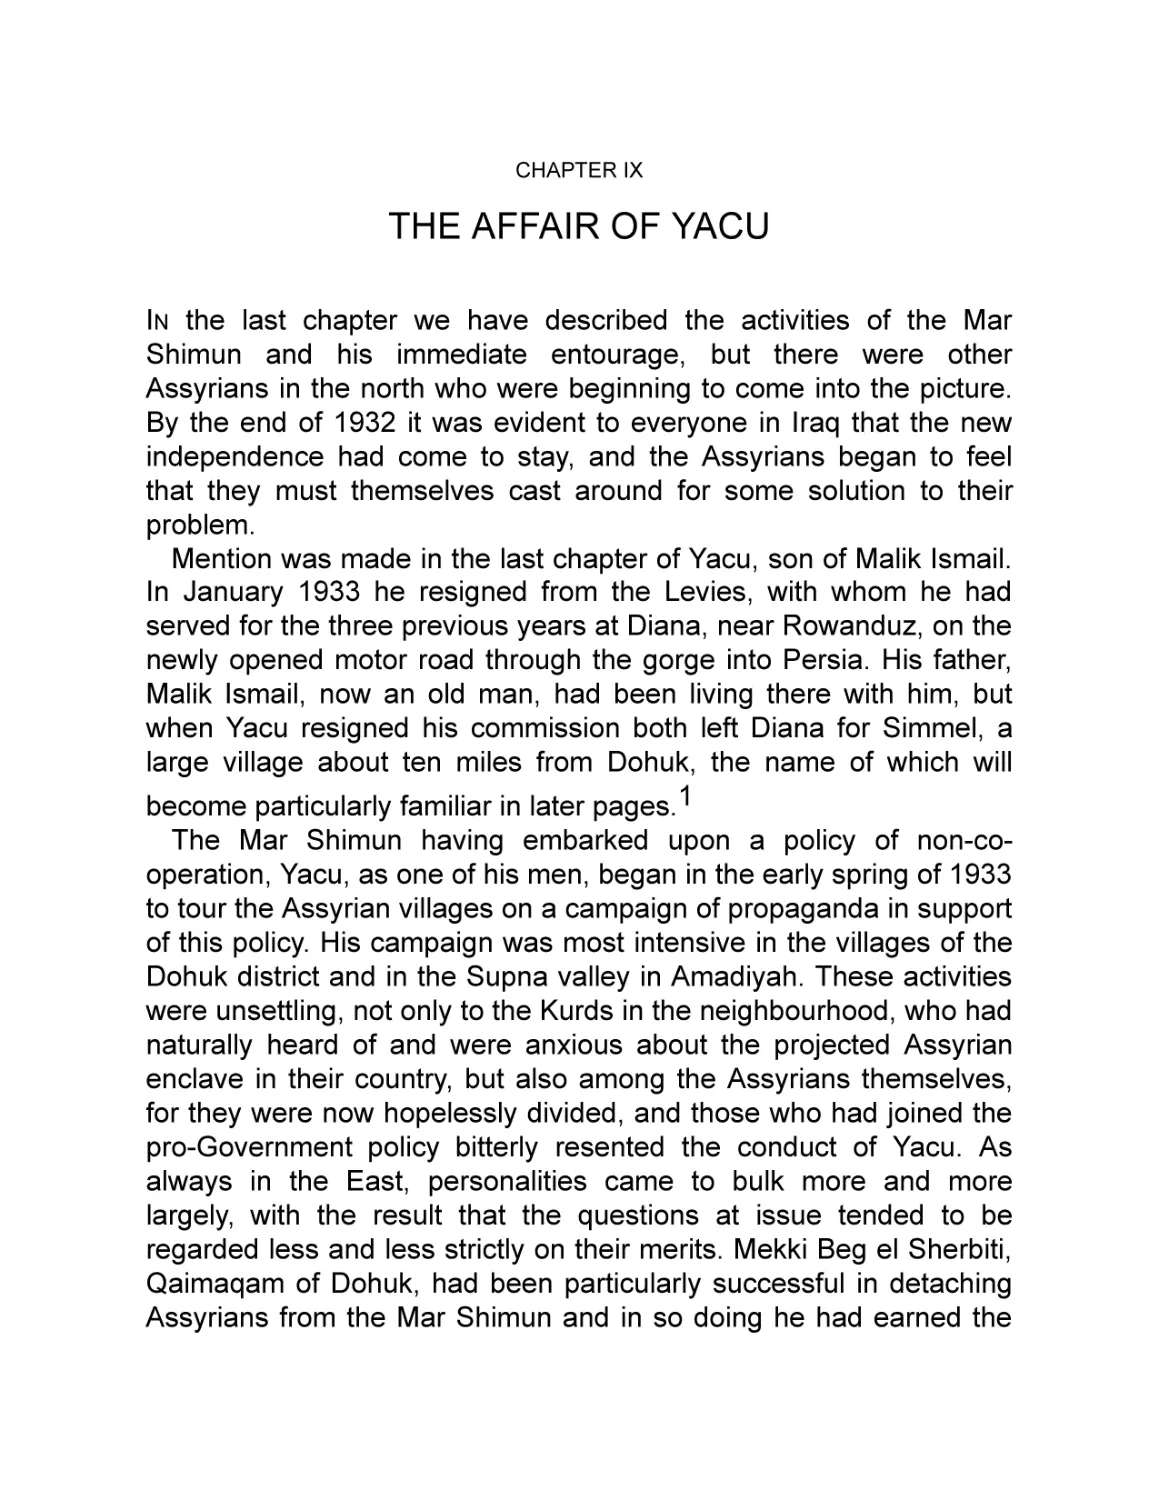 IX The Affair of Yacu